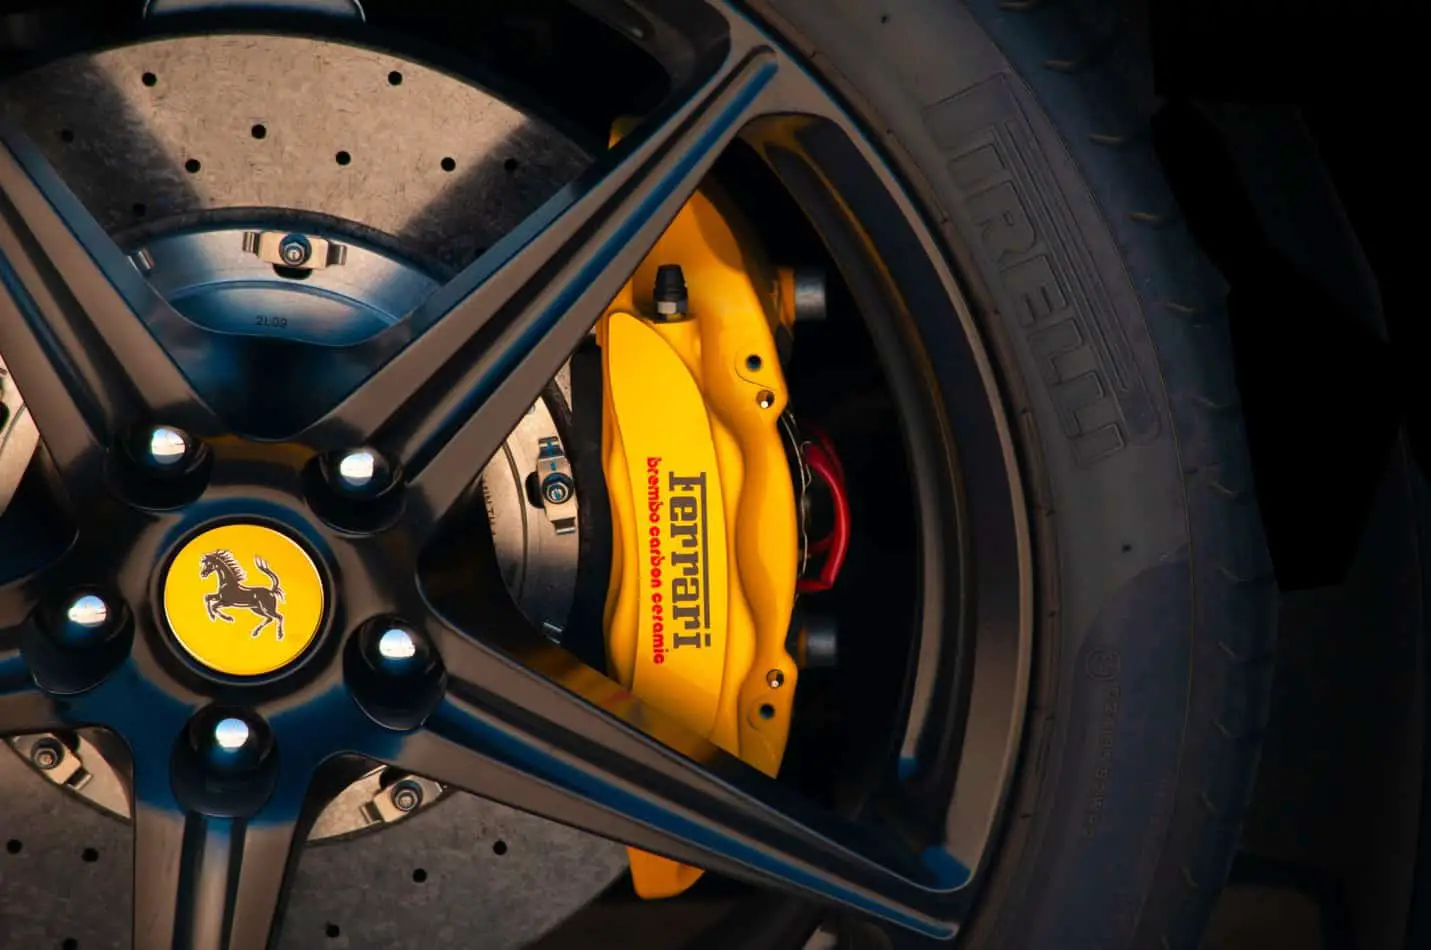 Yellow Ferrari brake calipers on brakes seen through black 5 spoke Ferrari rims